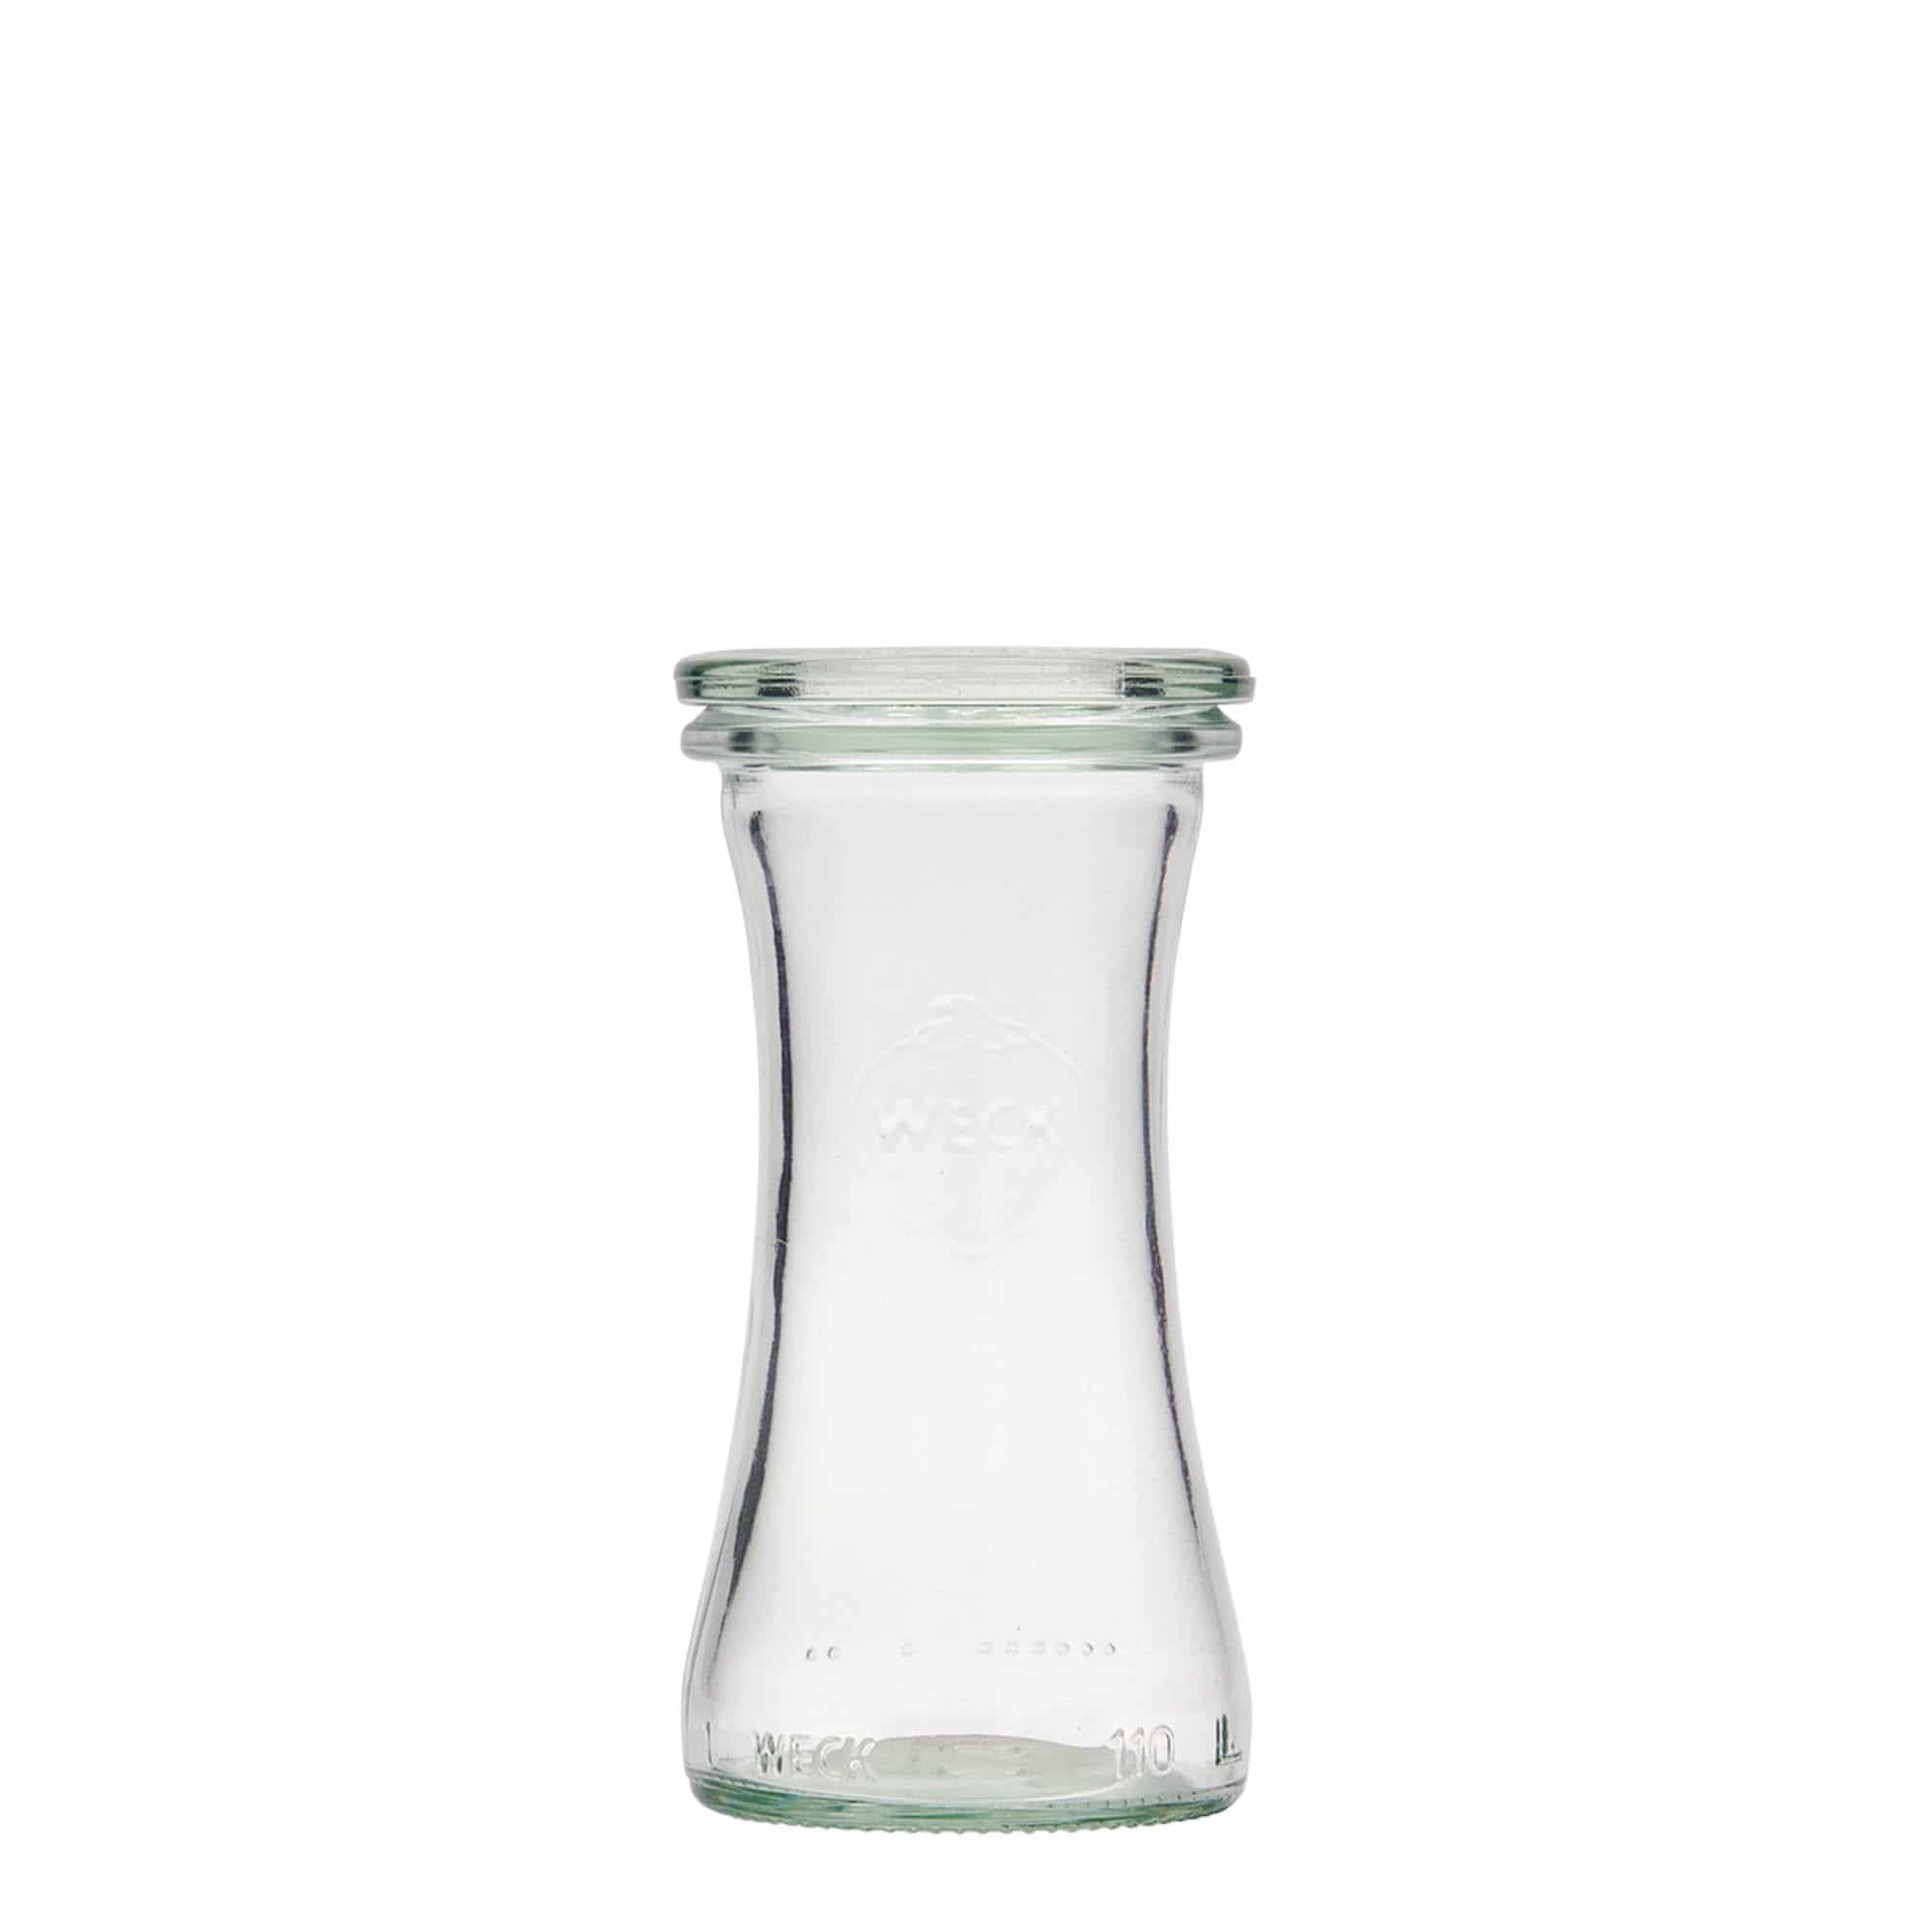 110 ml WECK-delikatesseglas, åbning: Rund kant